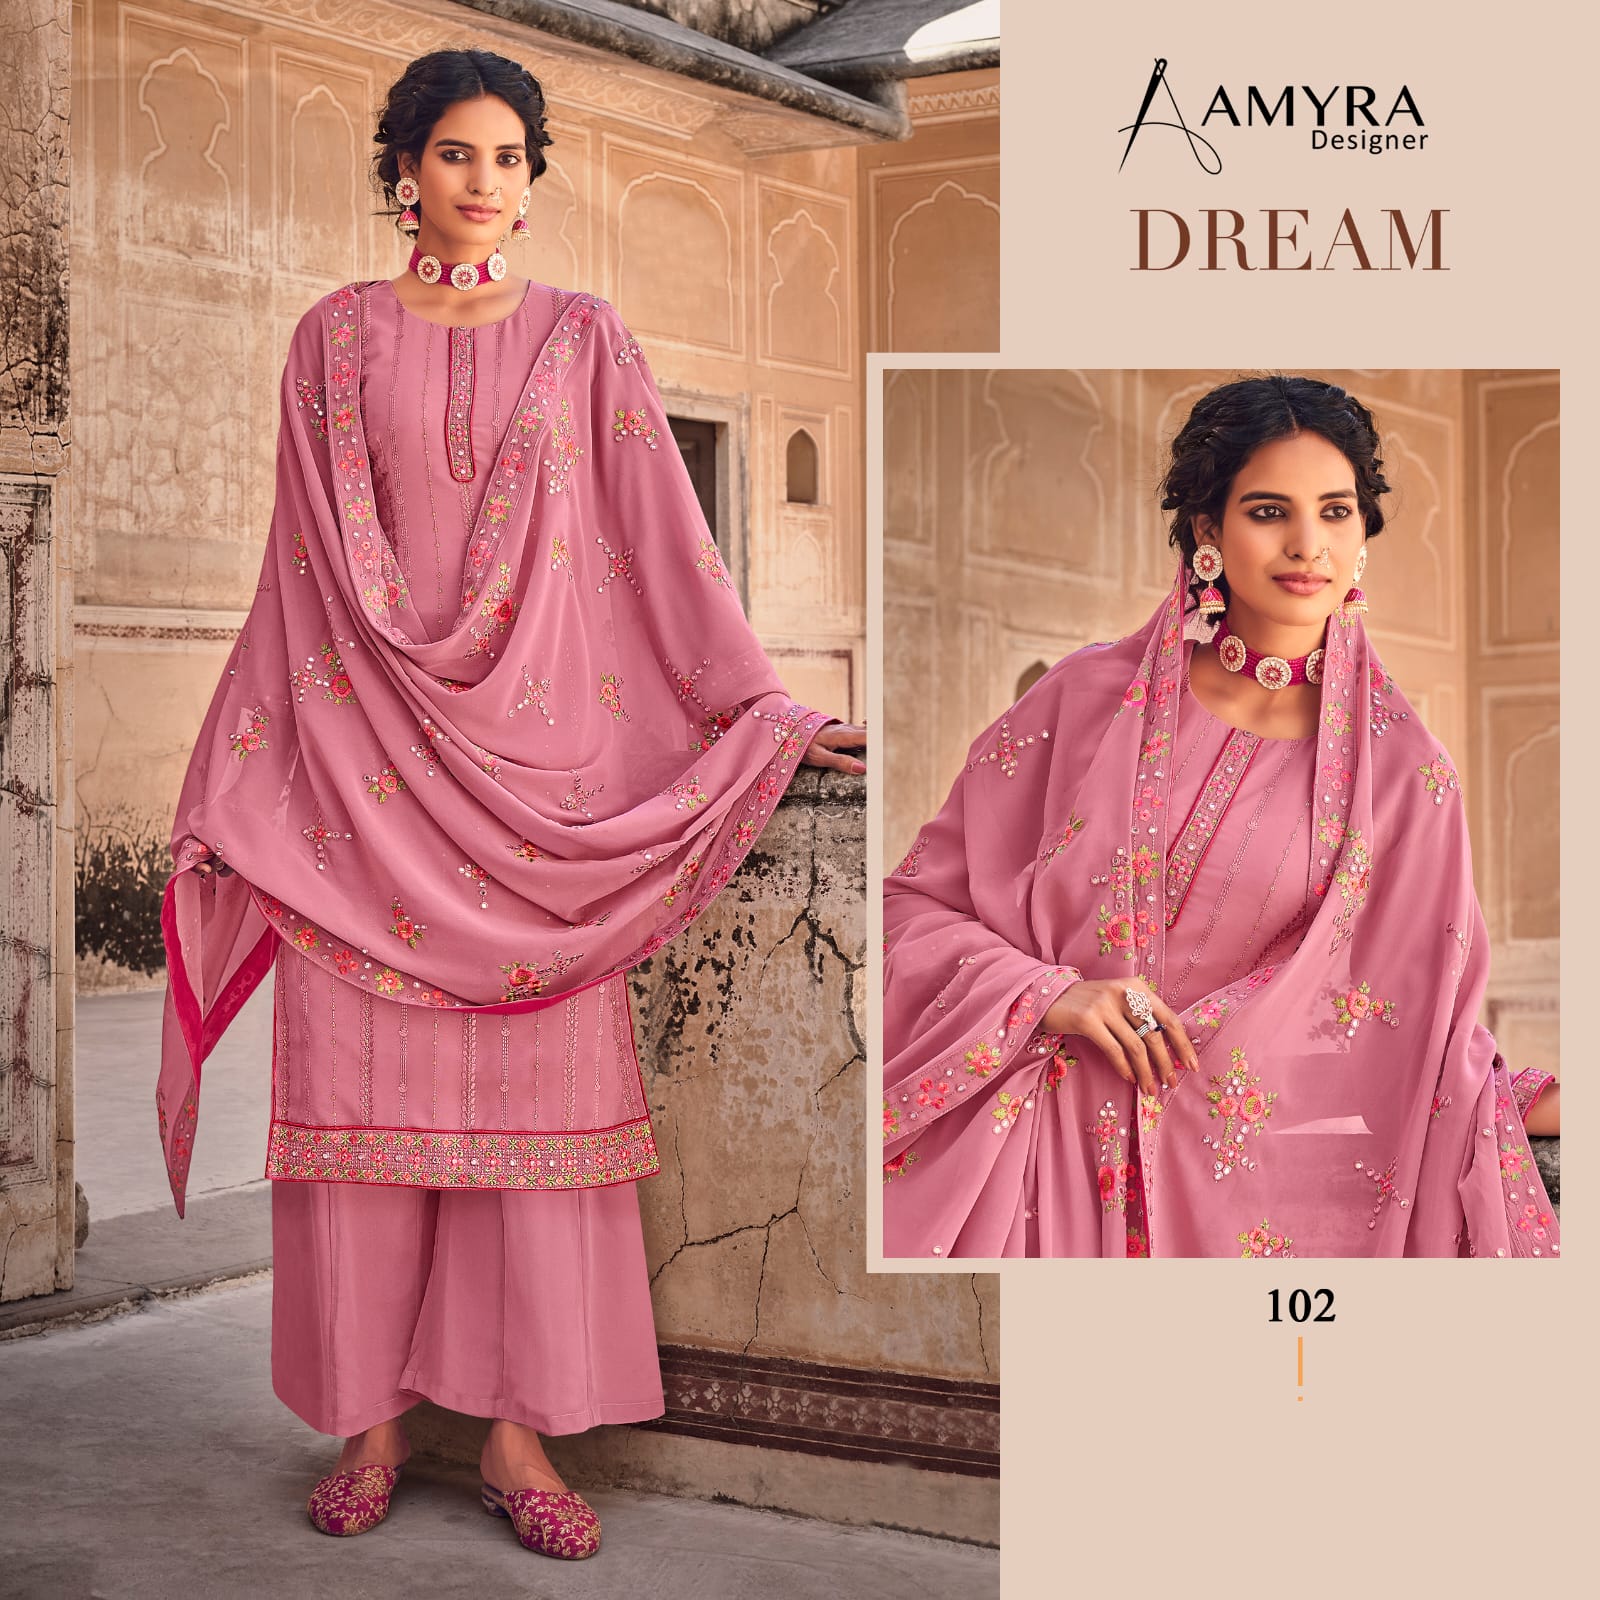 Amyra Dream collection 4